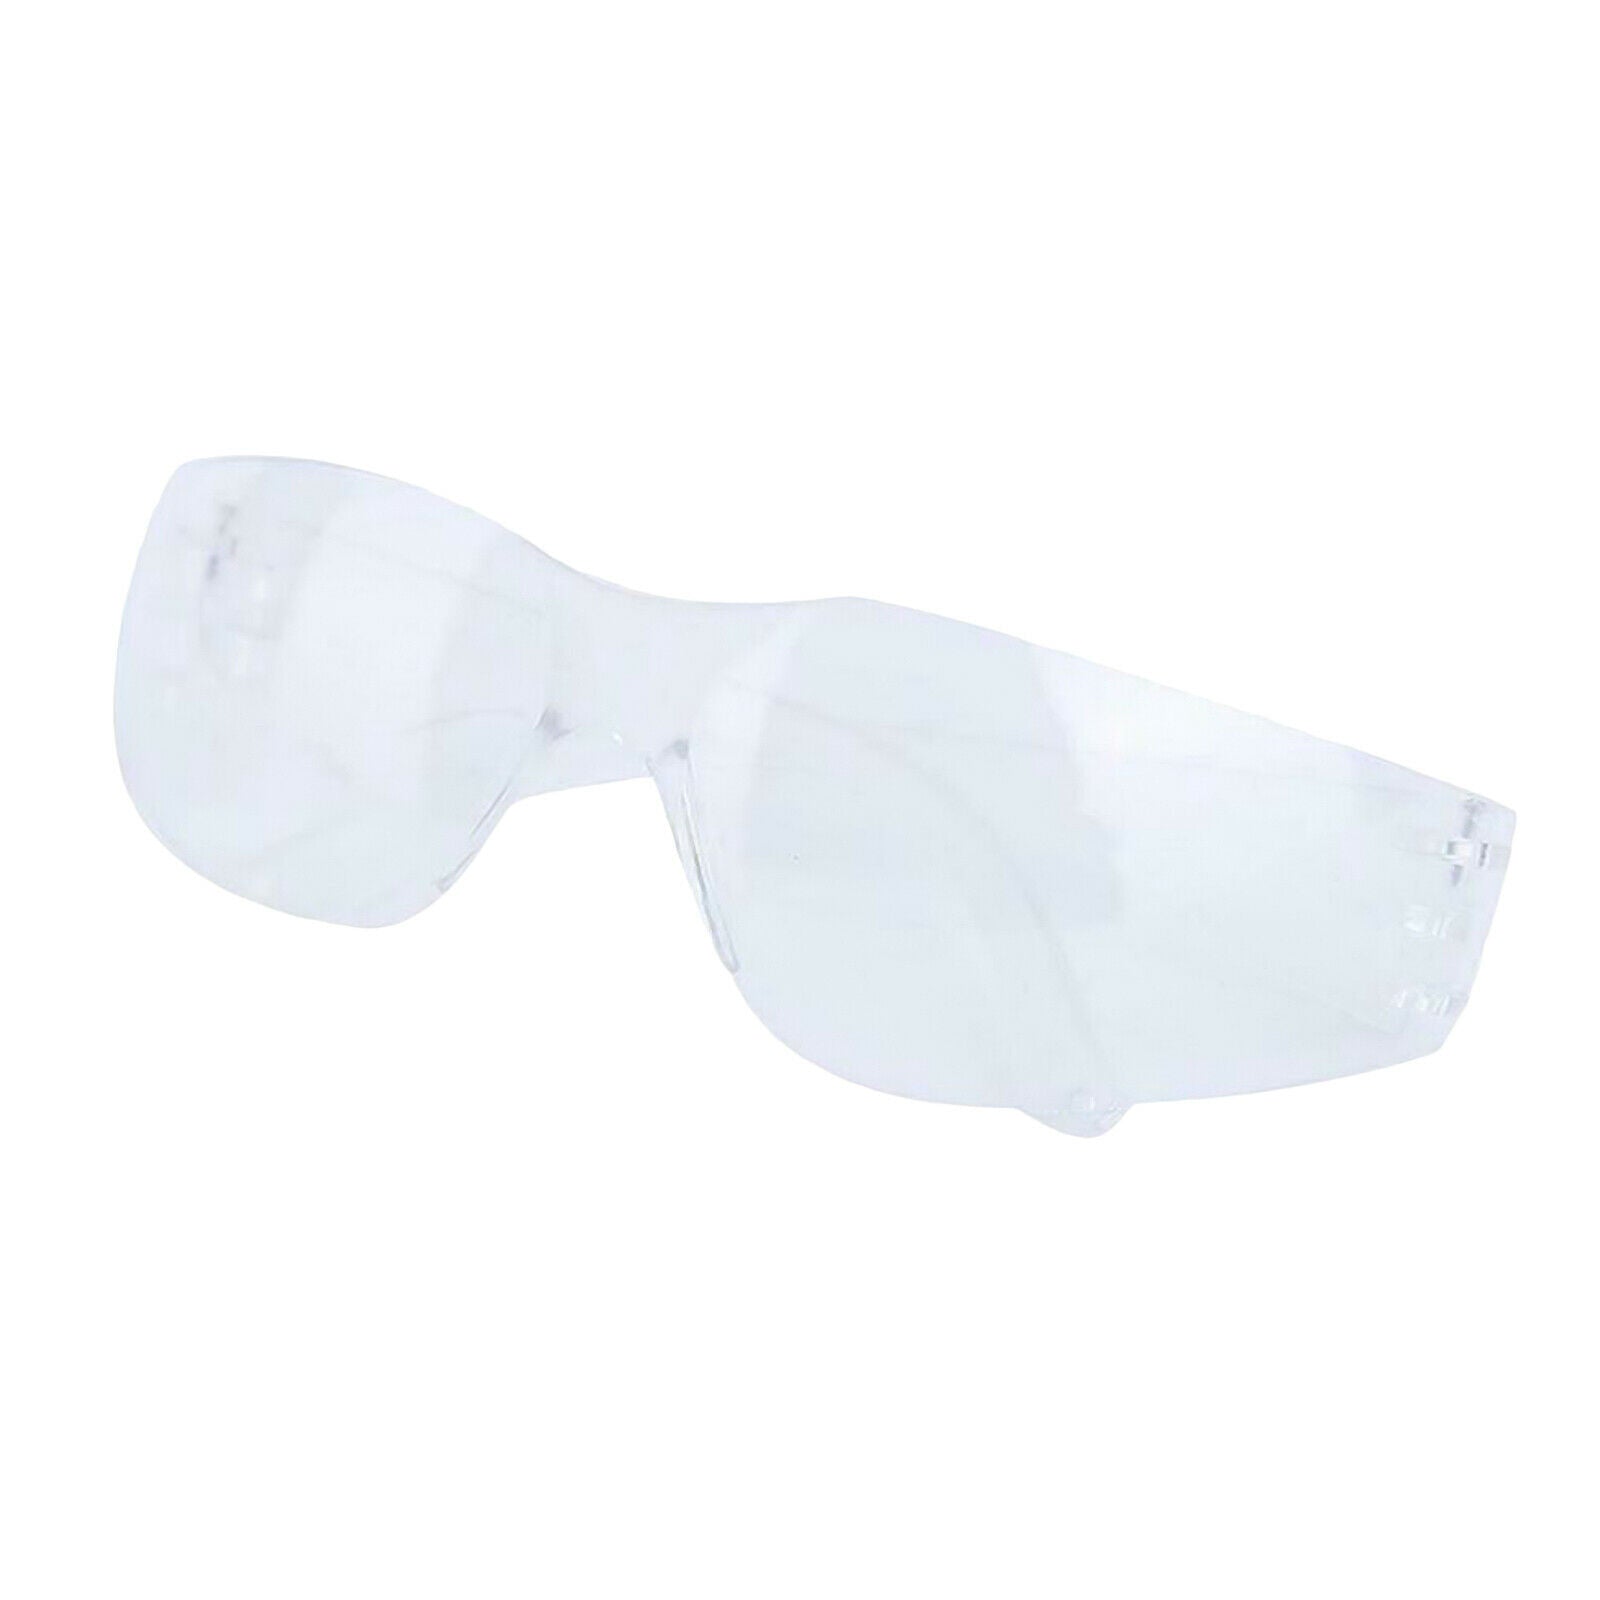 Safety Glasses Transparent Frame for Men Women Laboratory Chemicals Construction